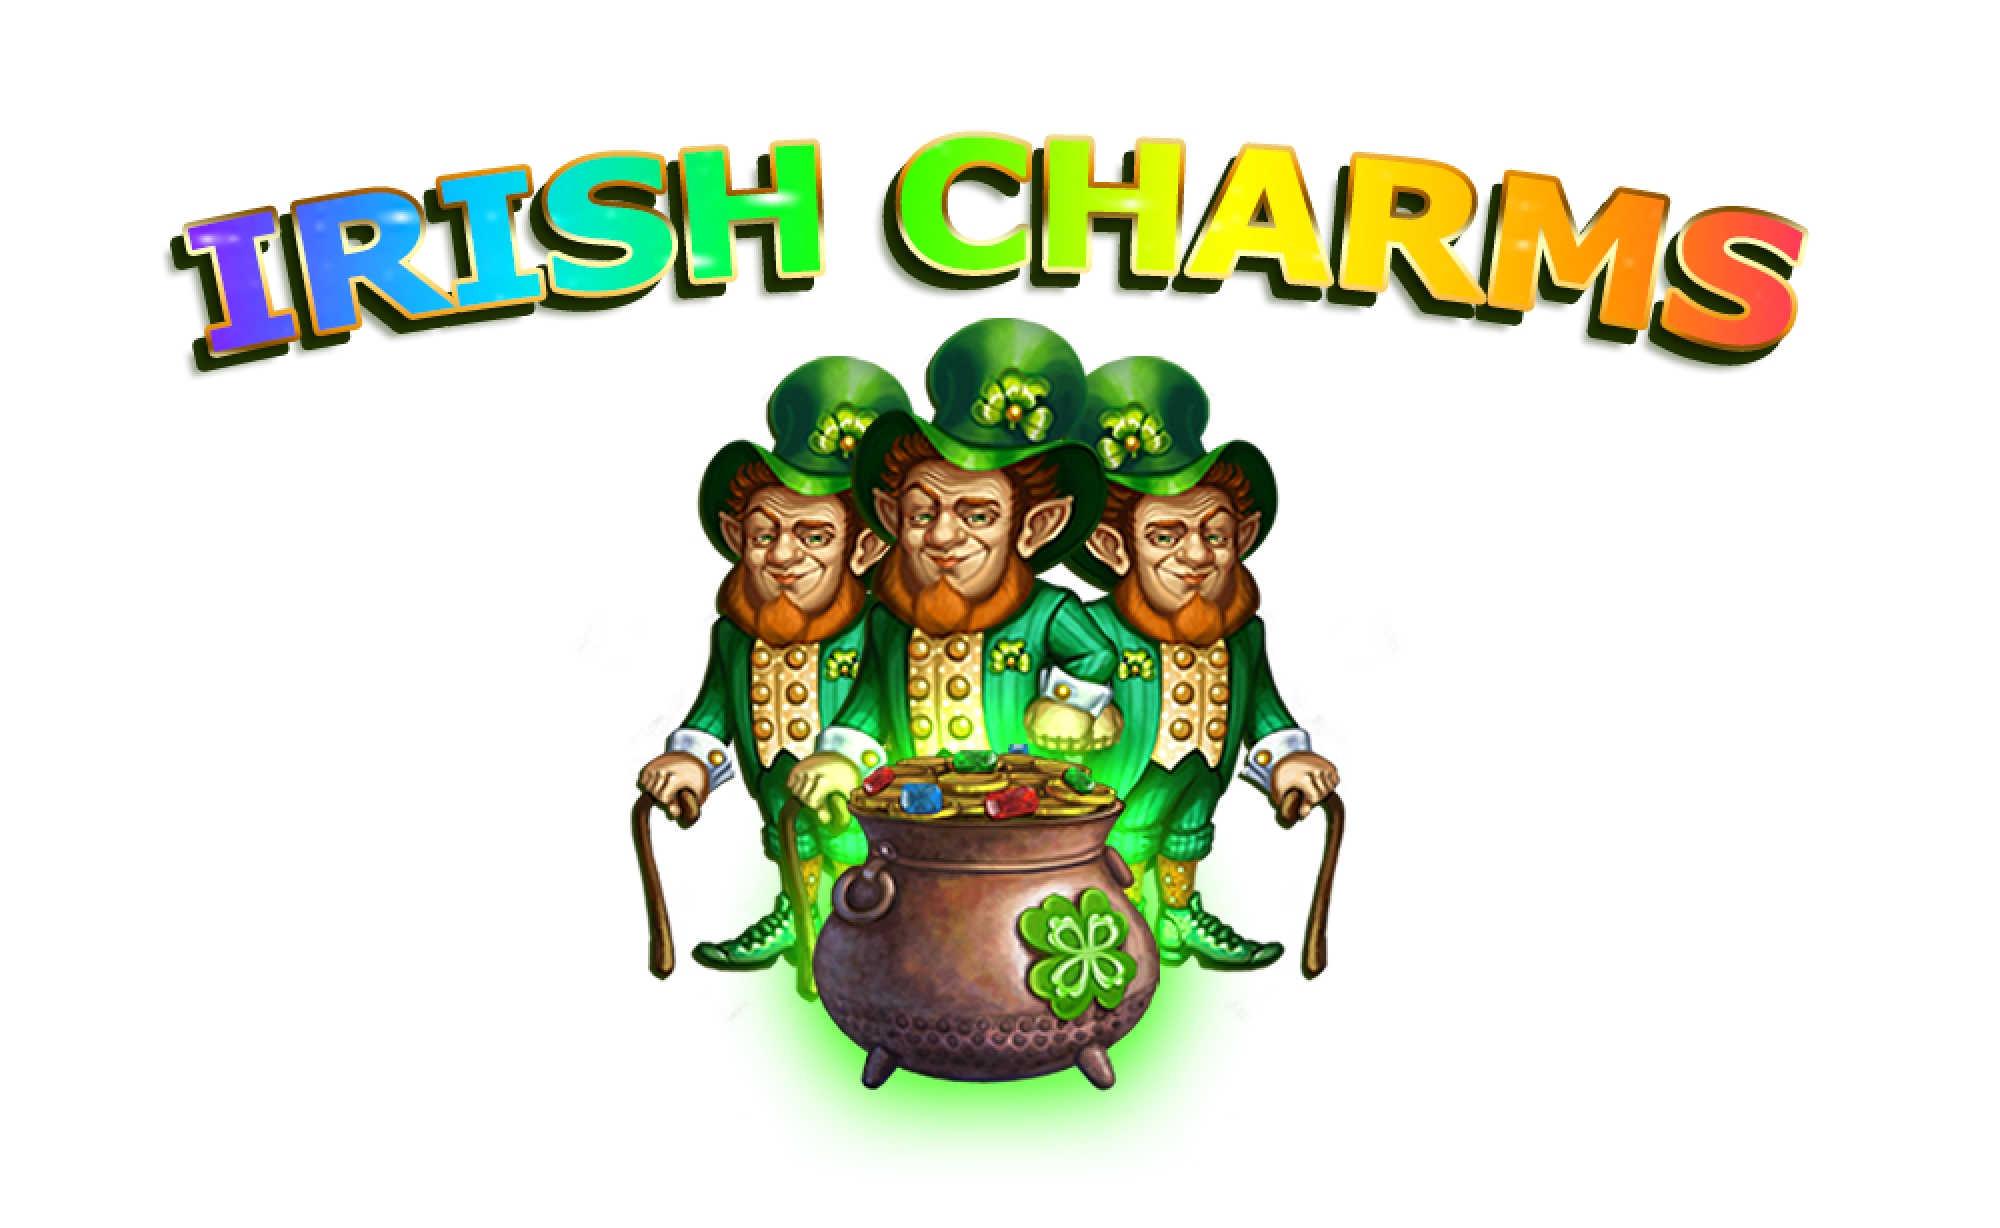 Irish Lucky Charms demo